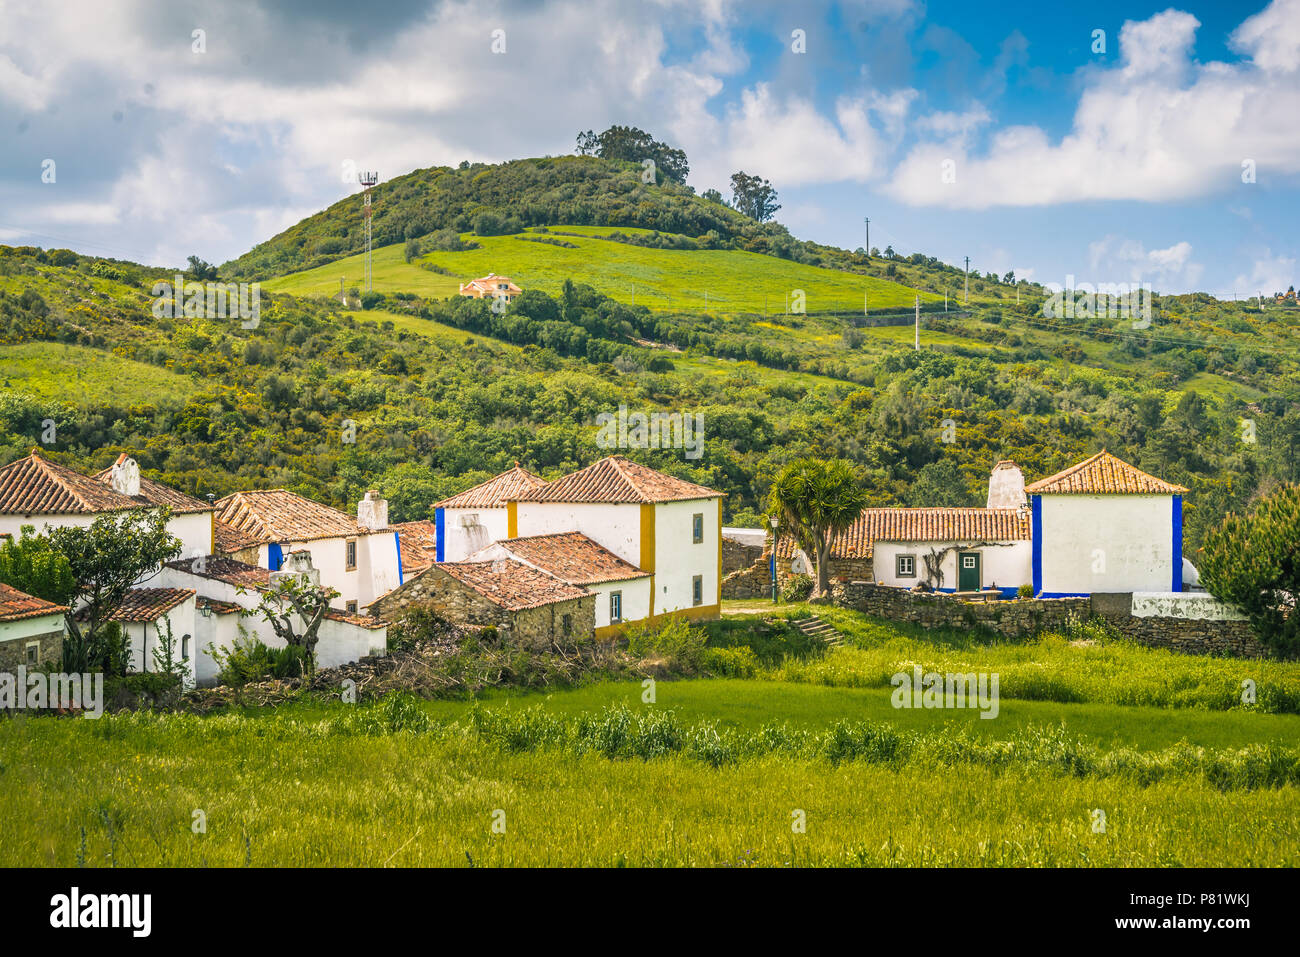 The traditional village of Aldeia da Mata Pequena near Lisbon, Portugal. Stock Photo